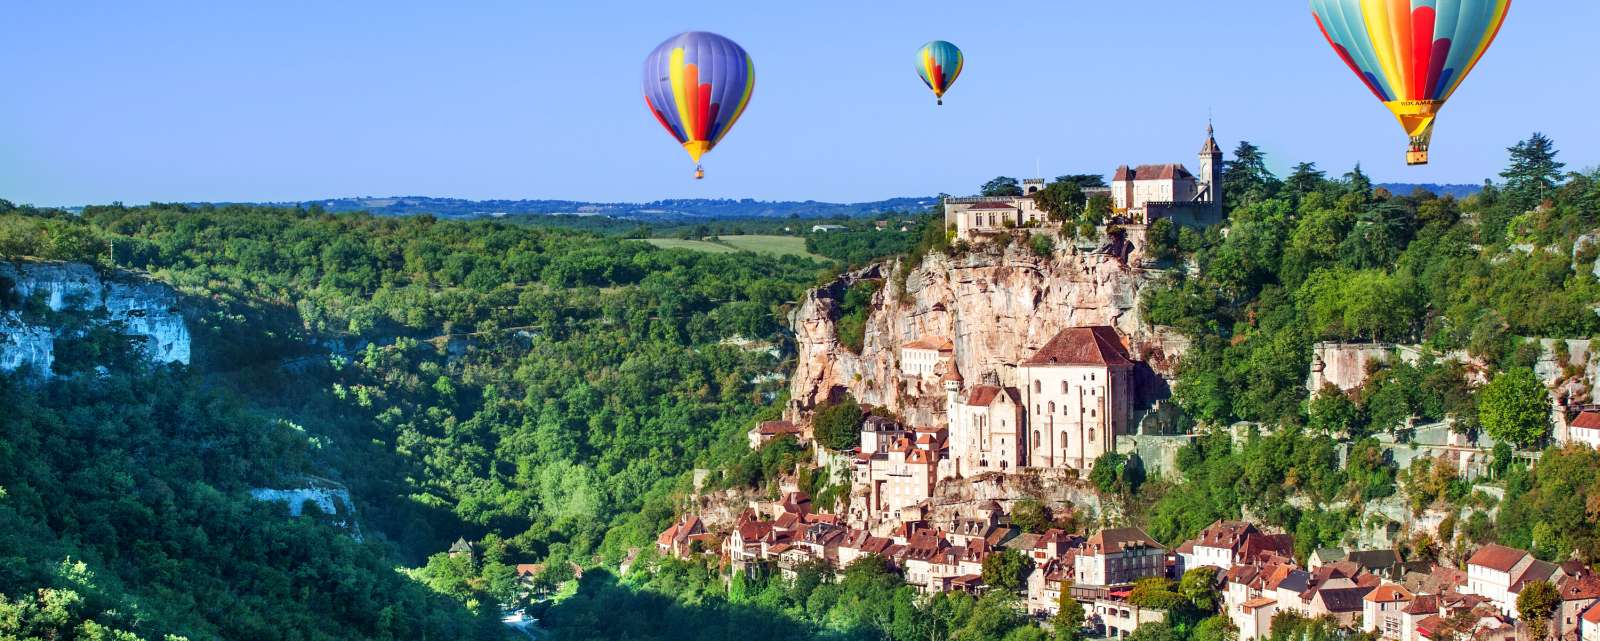 France Occitanie Bespoke Luxury Holidays with In Luxe Travel France, the France Luxury Travel Specialist since 2007